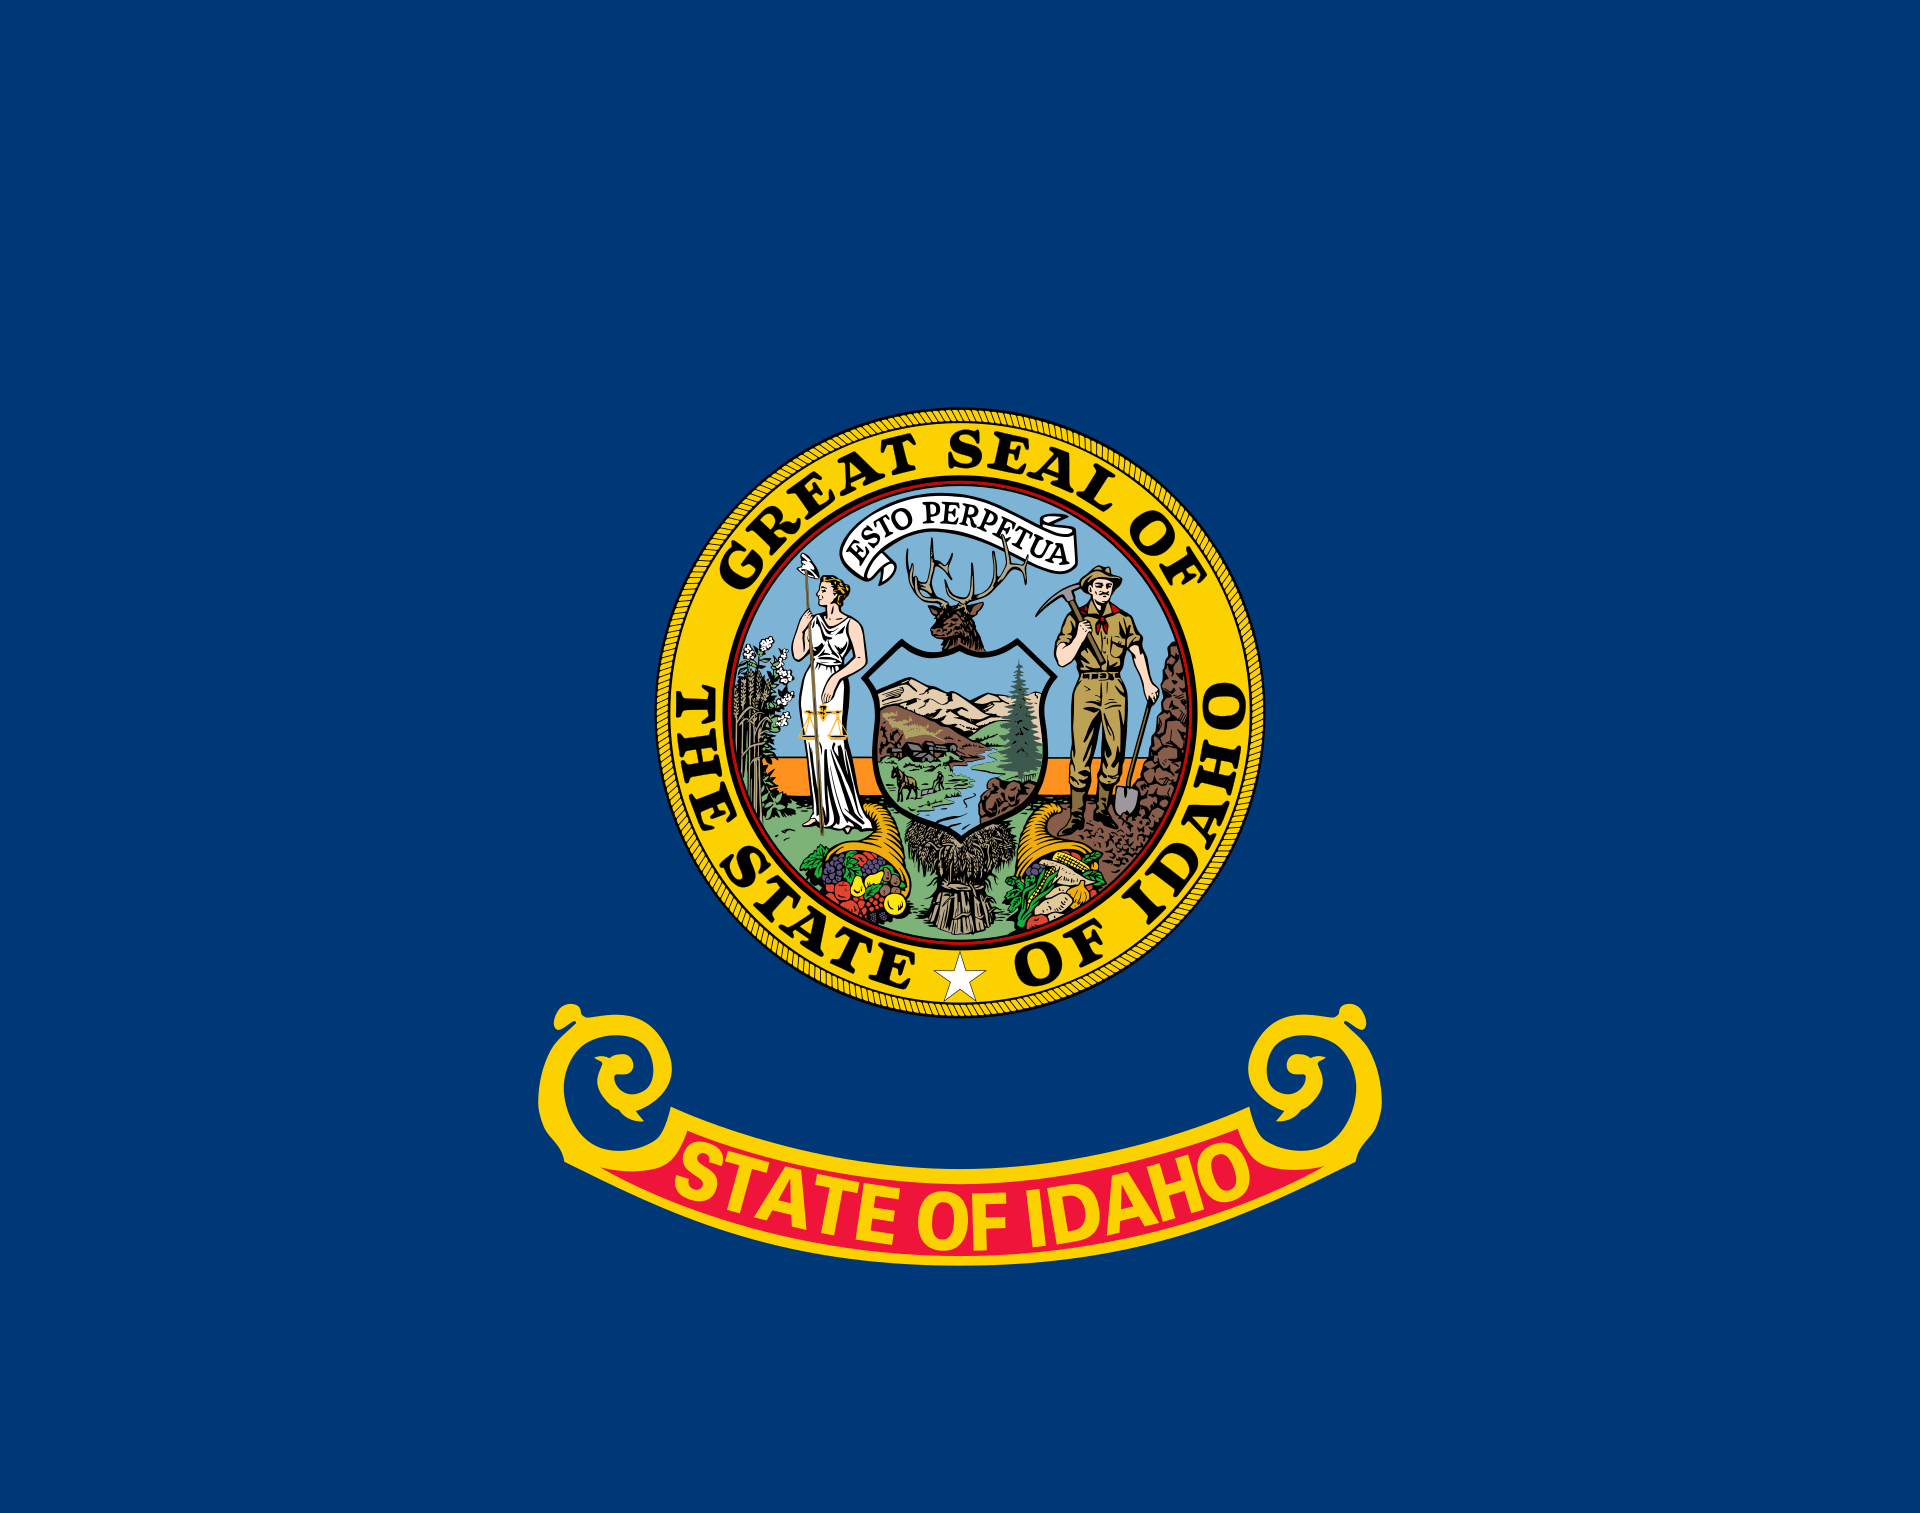 The Idaho state flag